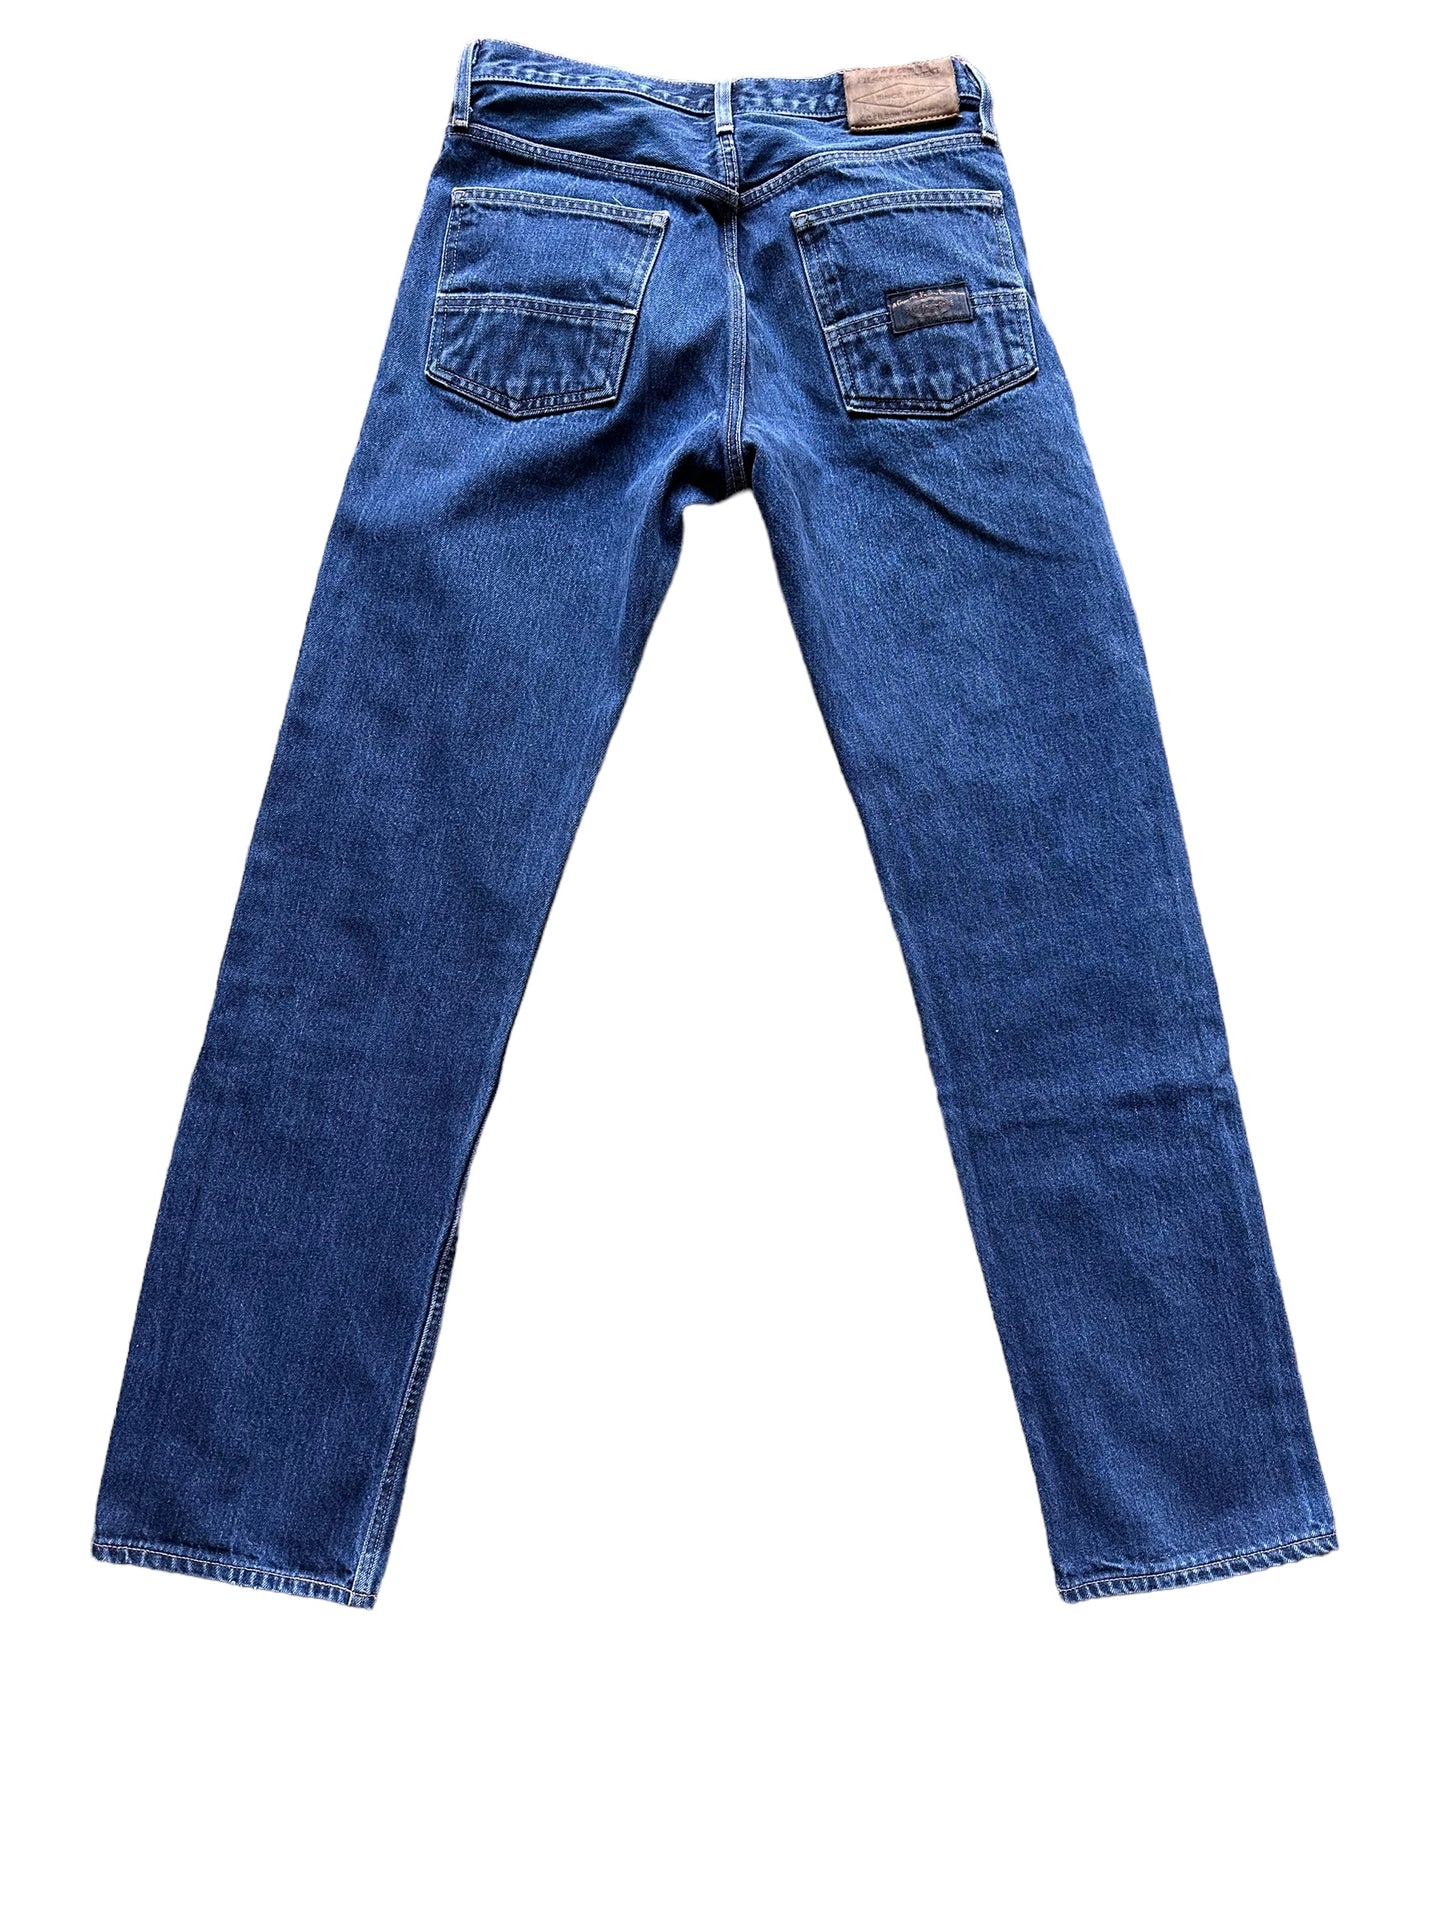 Rear View of Filson Denim Doublefront Jeans W30 |  Filson Double Knees | Filson Denim Workwear Seattle